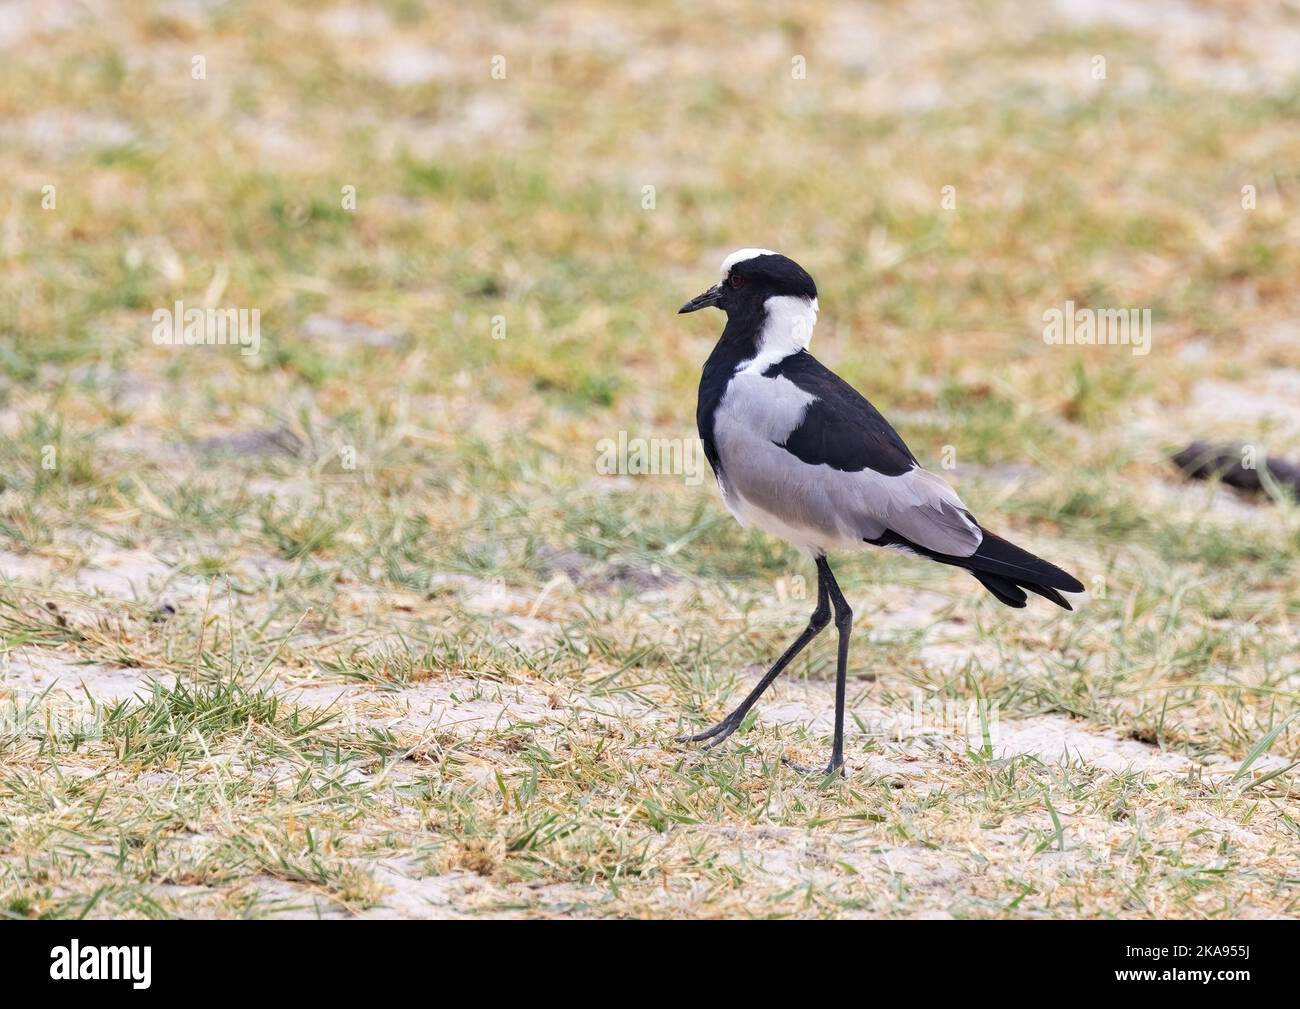 Hufschmied Plover, alias. Hufschmied Lapwing, Vanellus armatus, auf dem Boden, Okavango Delta, Botsuana Afrika. Afrikanischer Vogel. Stockfoto